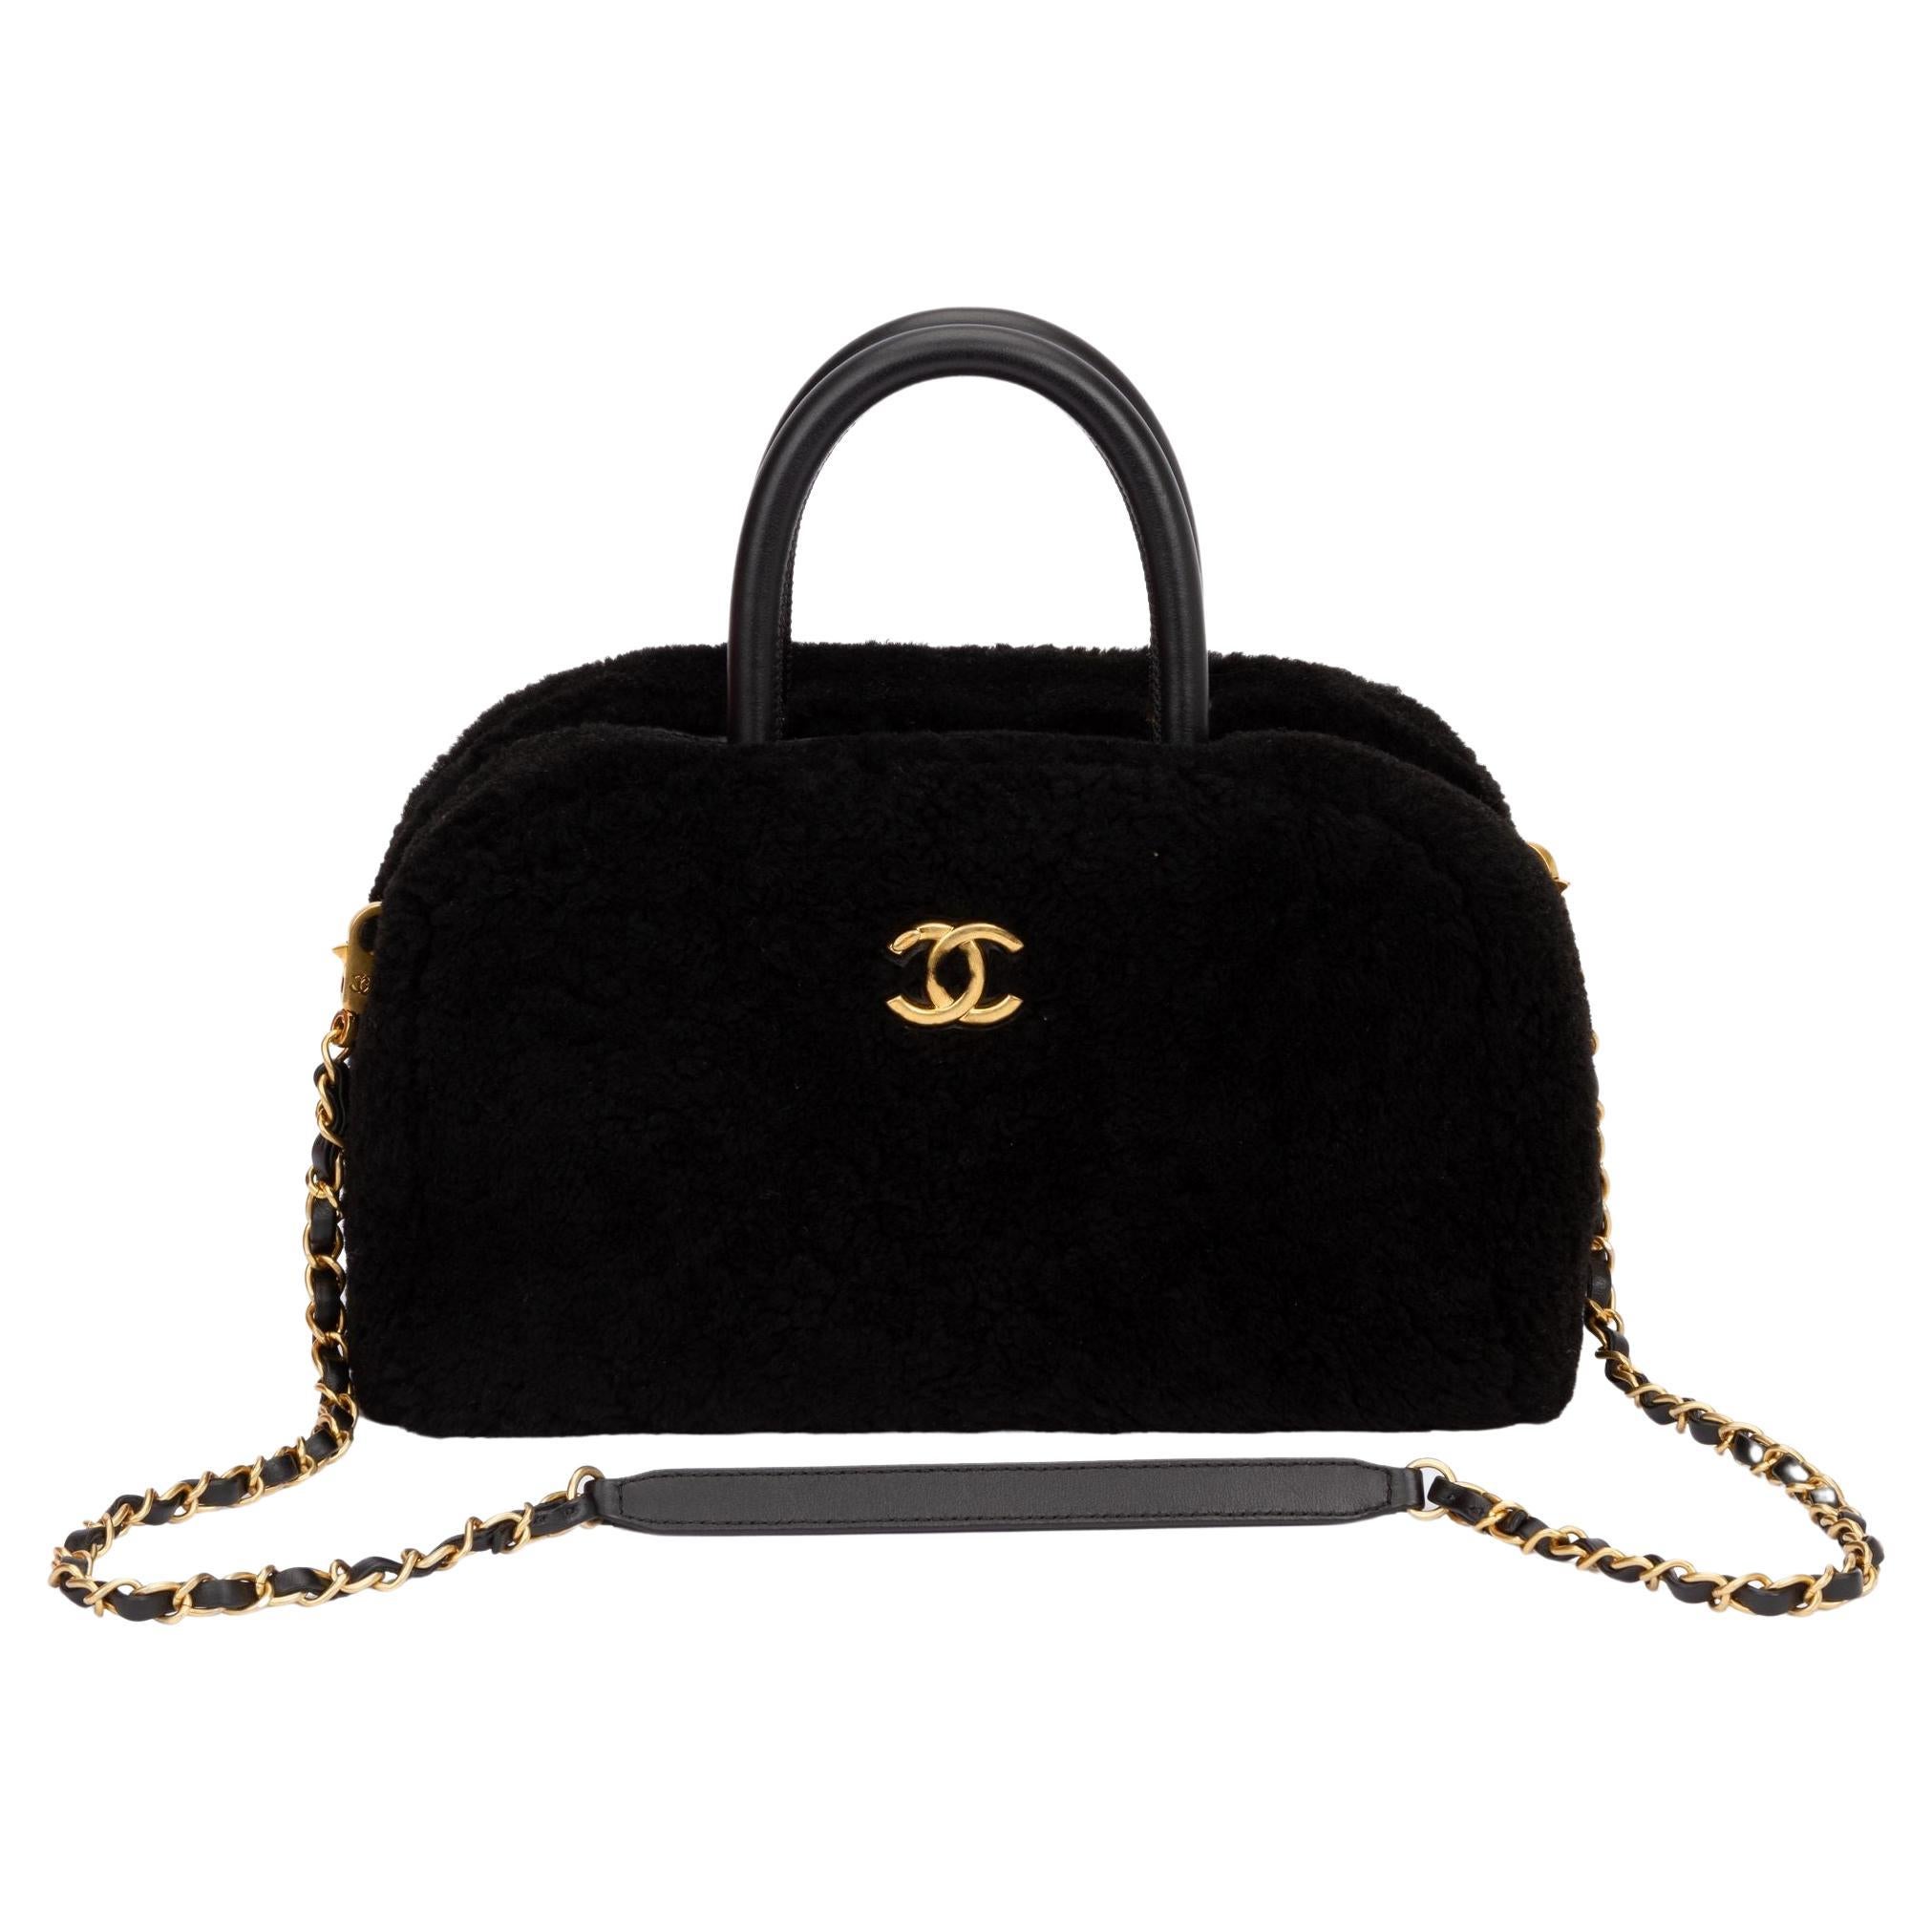 Chanel Bag Strap - 2,444 For Sale on 1stDibs  chanel boy bag strap, chanel  bag straps, chanel handbag straps